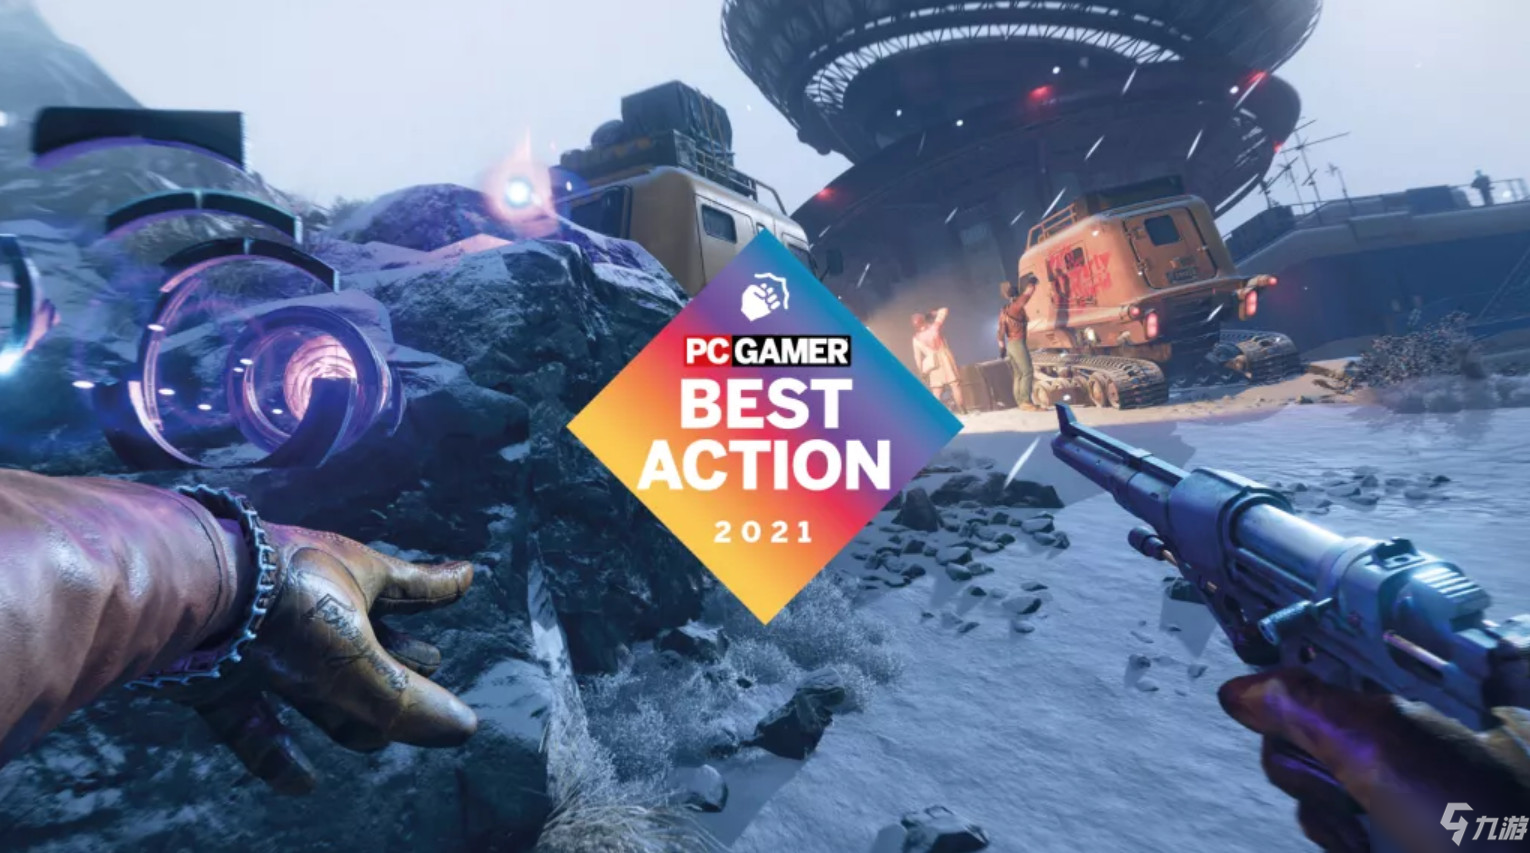 PC Gamer评选出2021最佳动作游戏：《死亡循环》